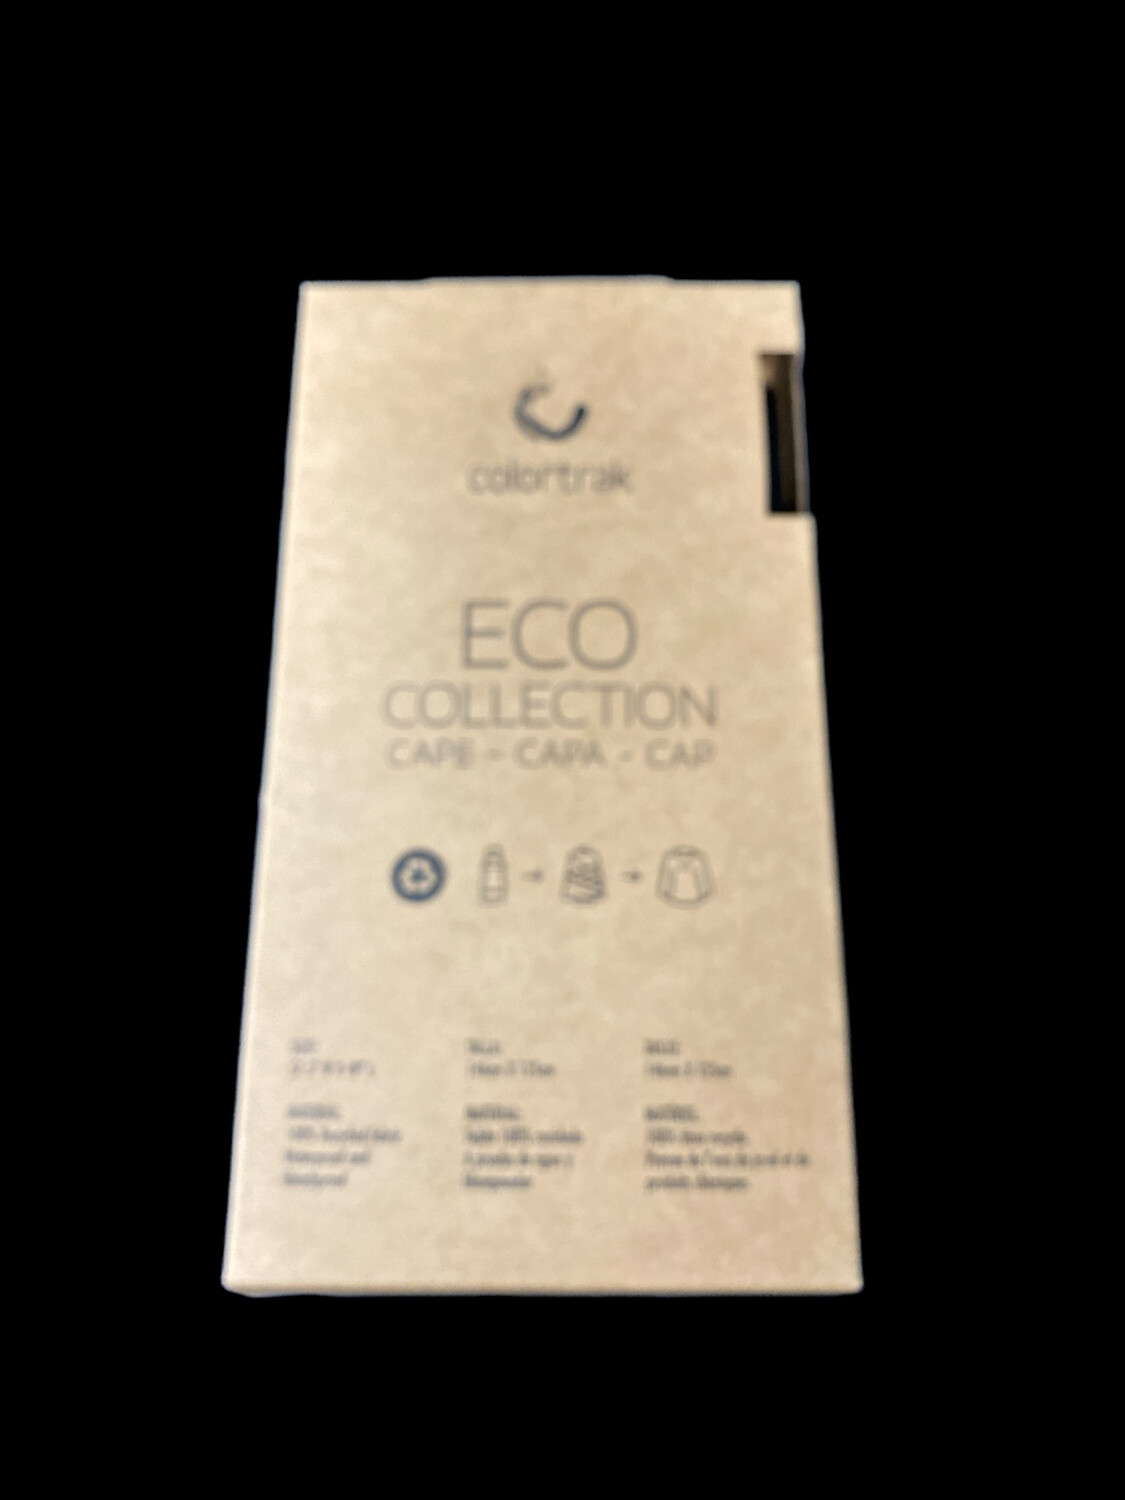 ColorTrak Eco Collection Cape